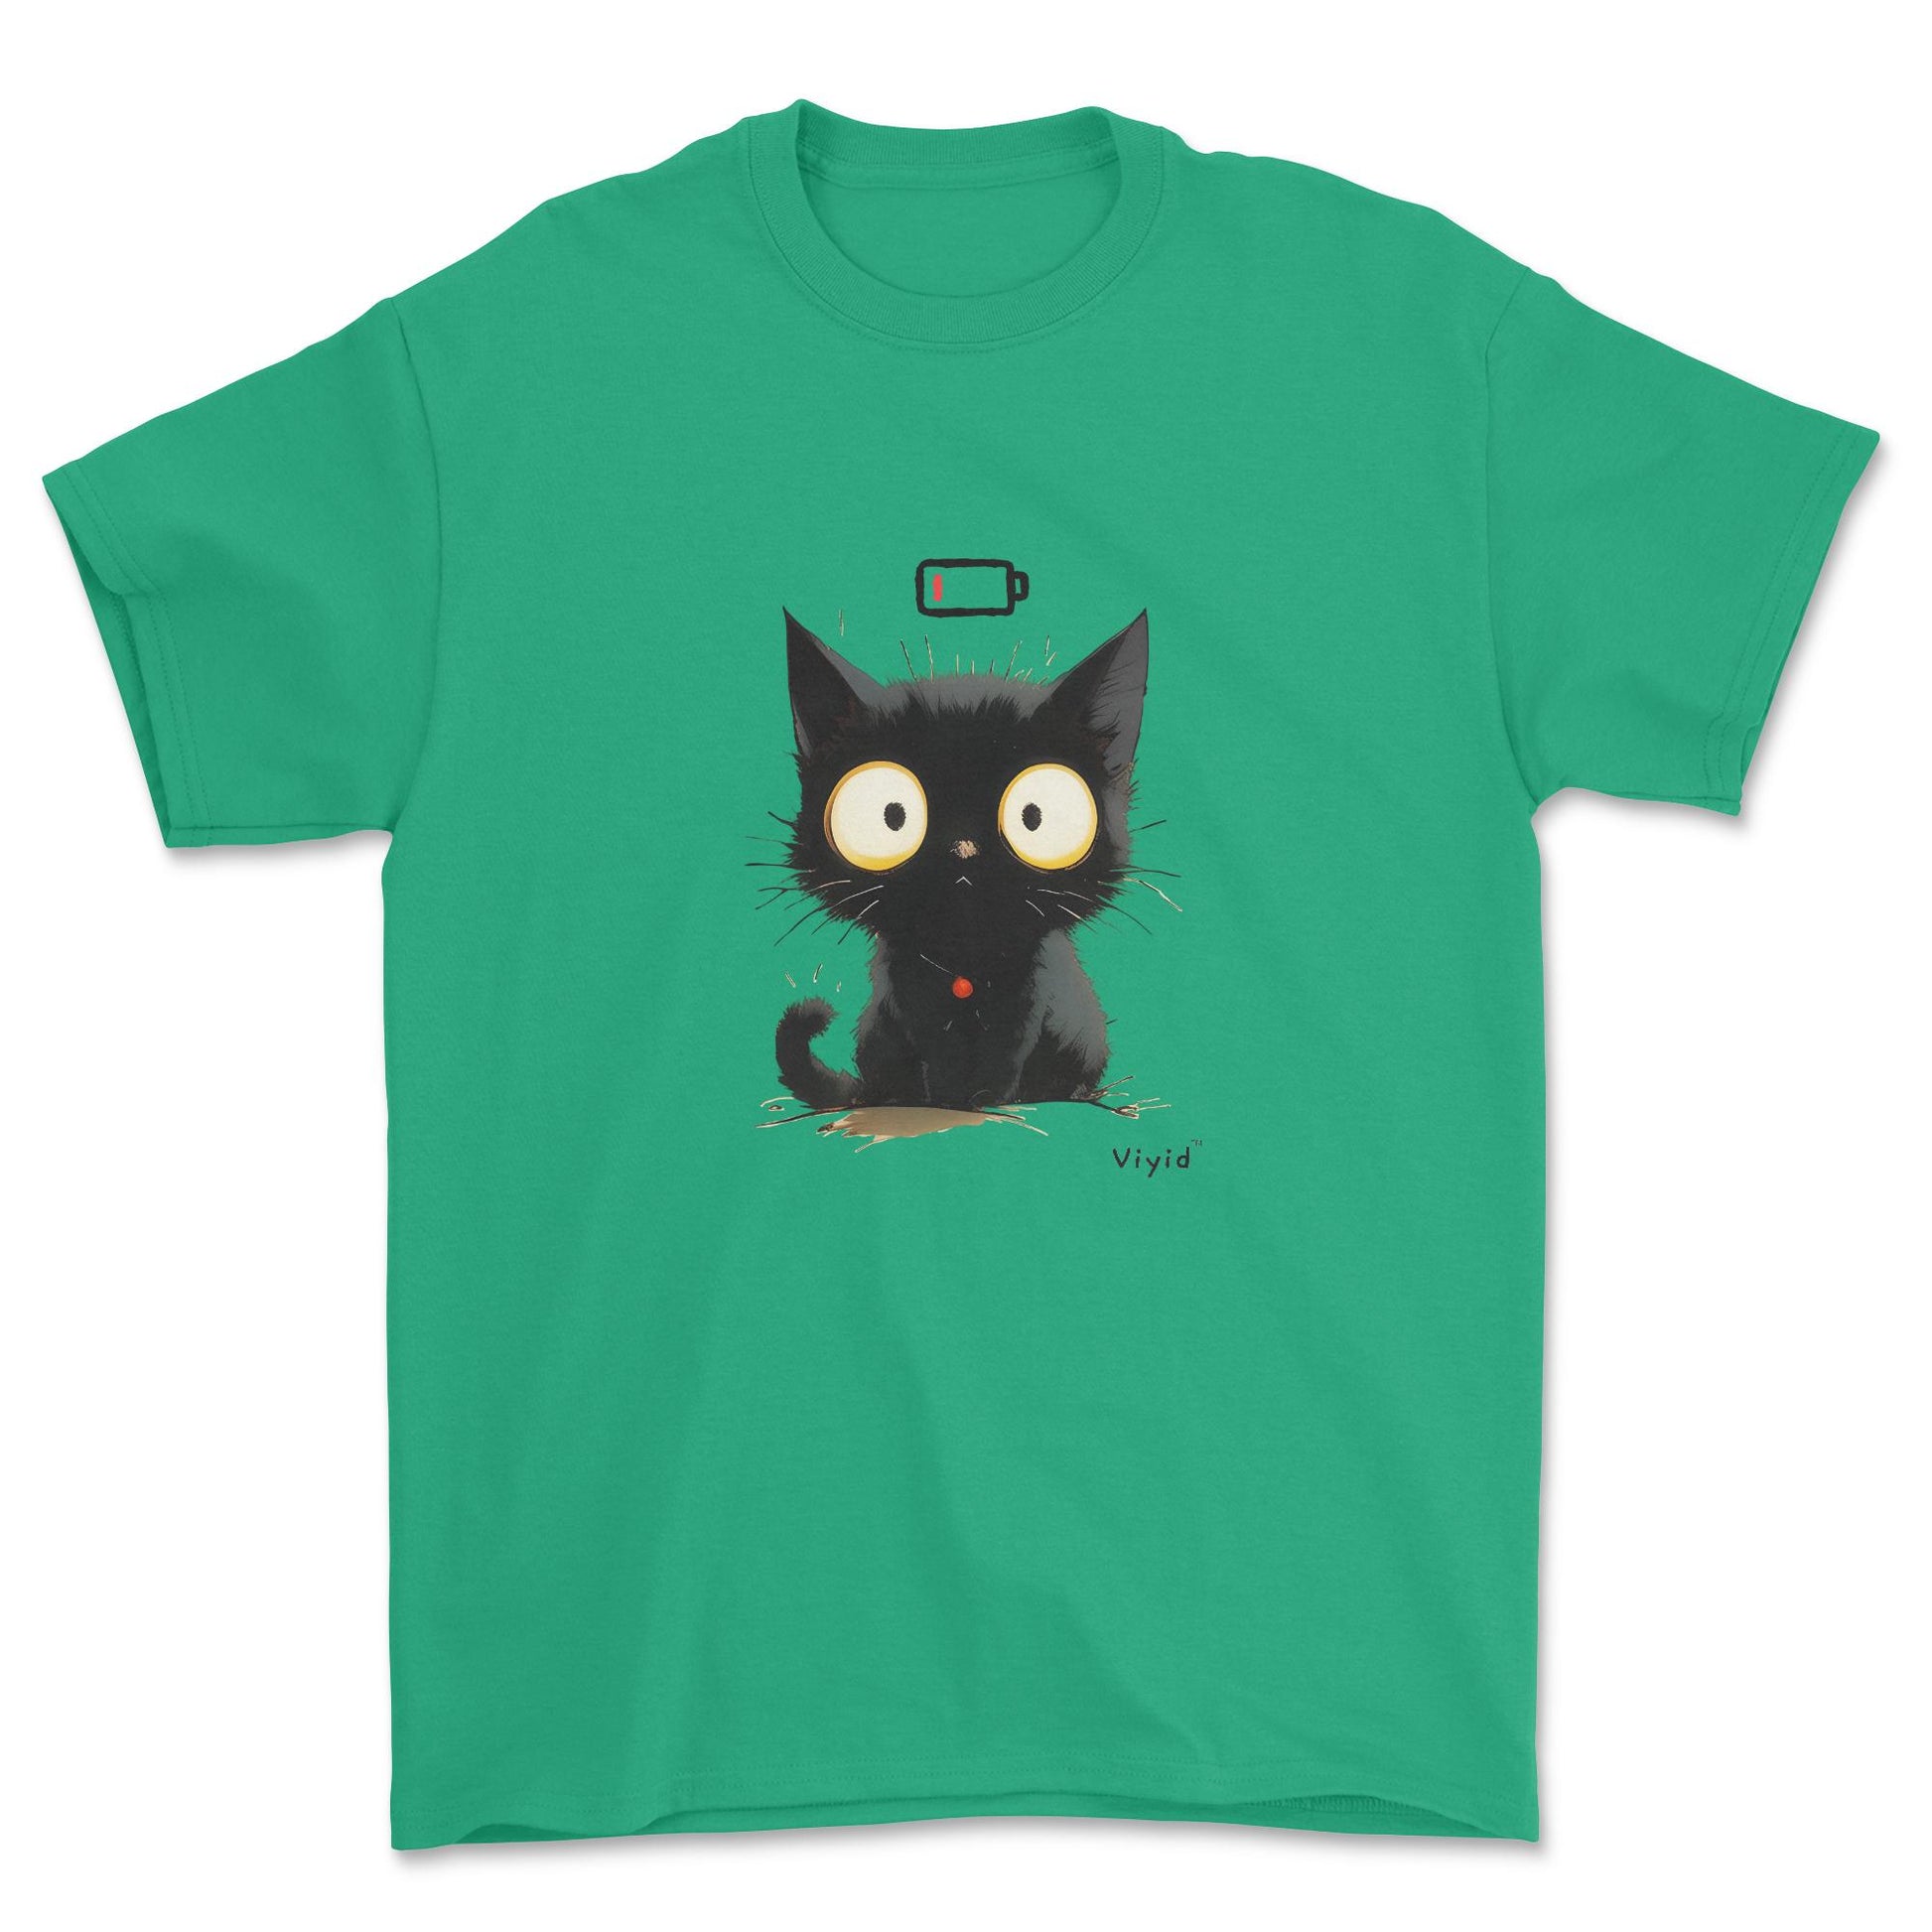 Low battery black cat youth t-shirt irish green